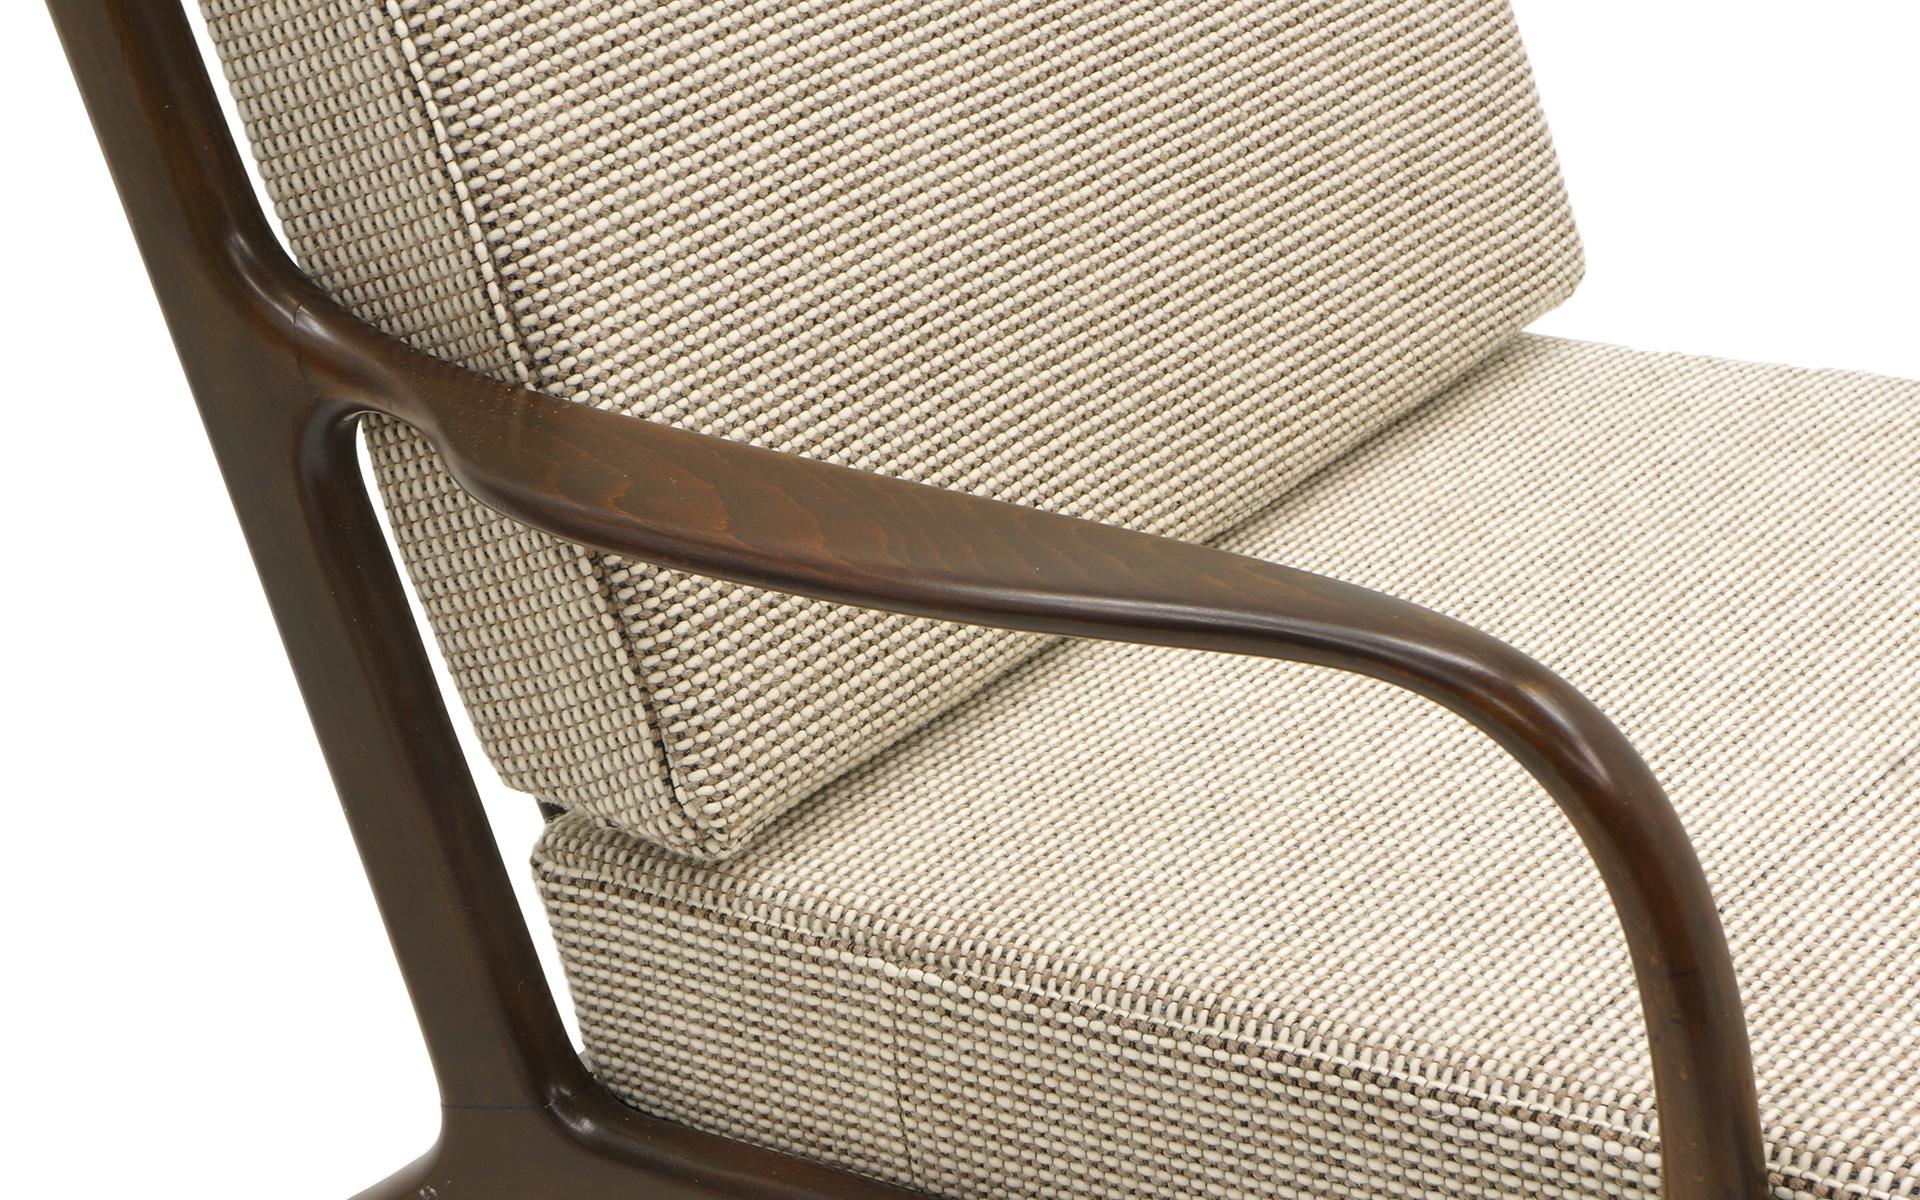 Pair Kofod-Larsen Danish Modern Lounge Chairs, Restored. PRICE IS FOR THE PAIR. 1